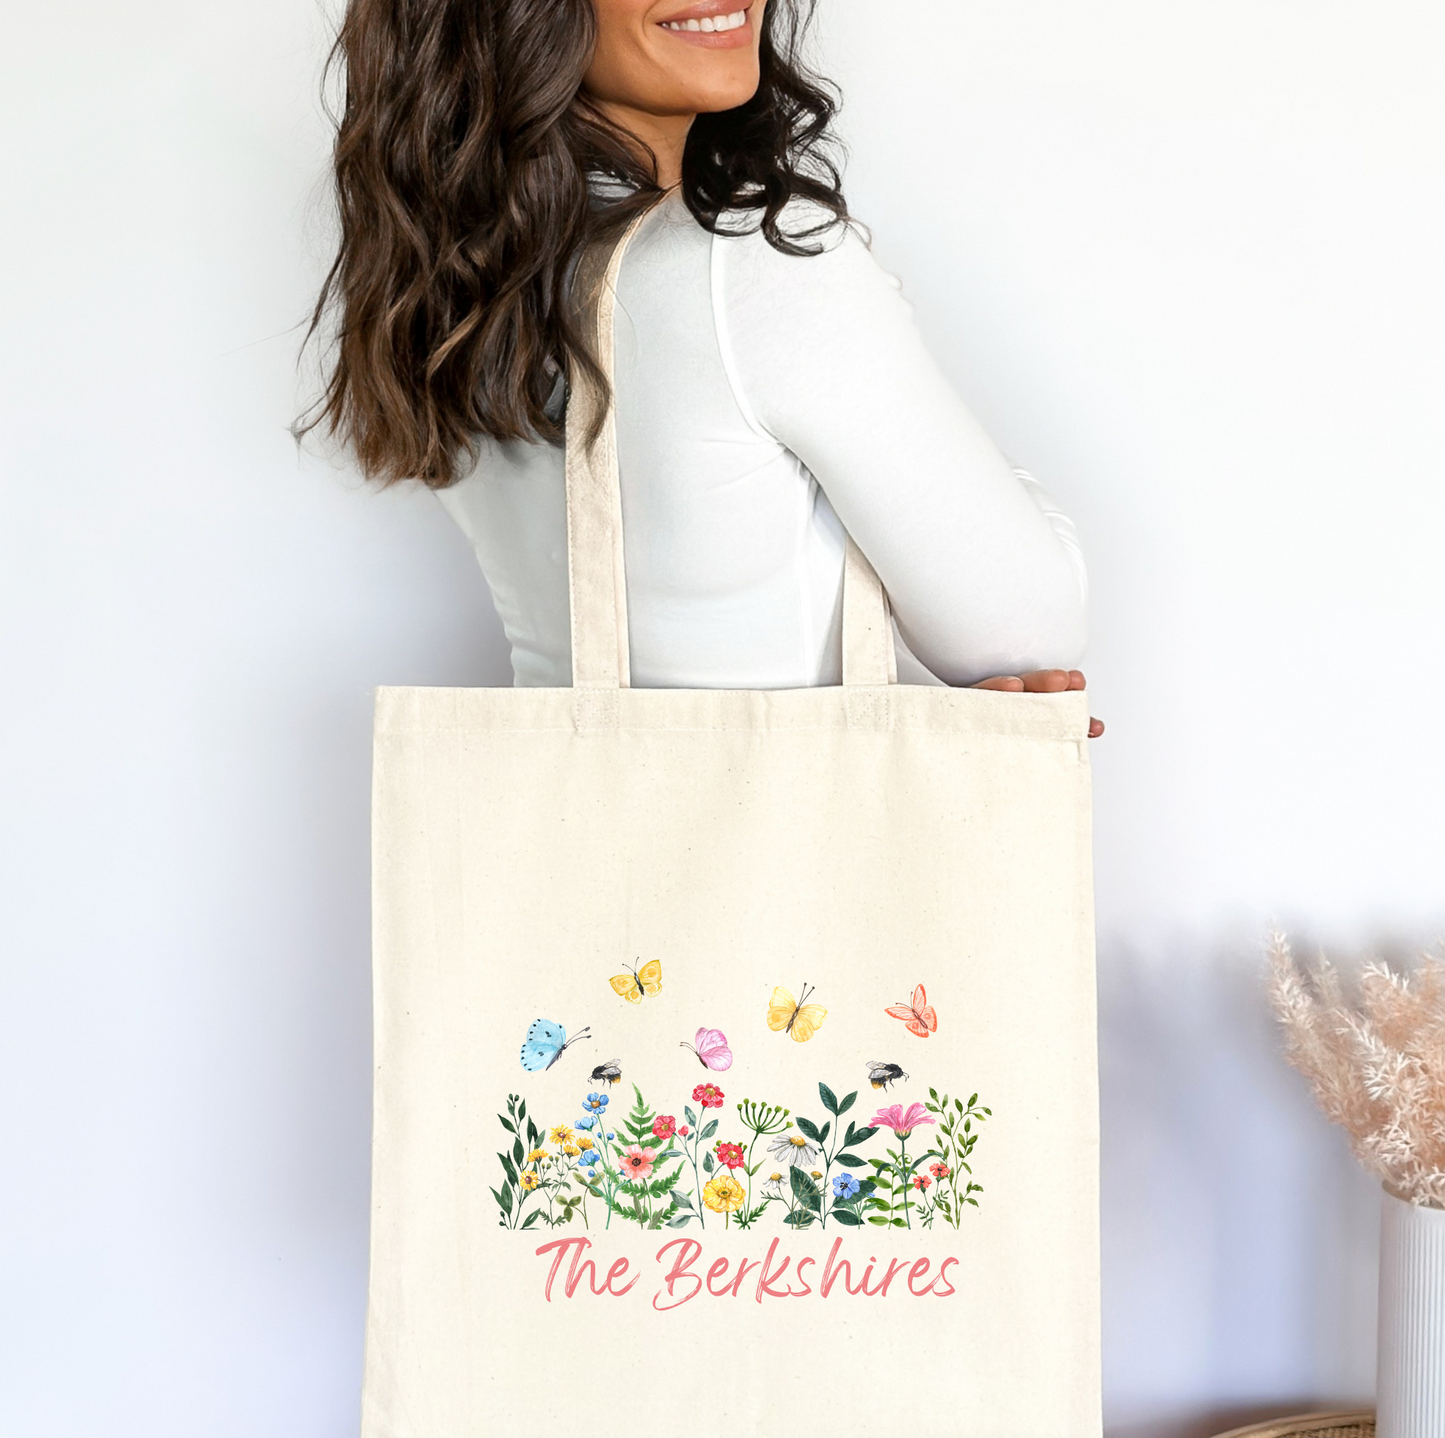 Embroidered Canvas Tote Bag, Women Shopper Bag, Floral Tote Bag